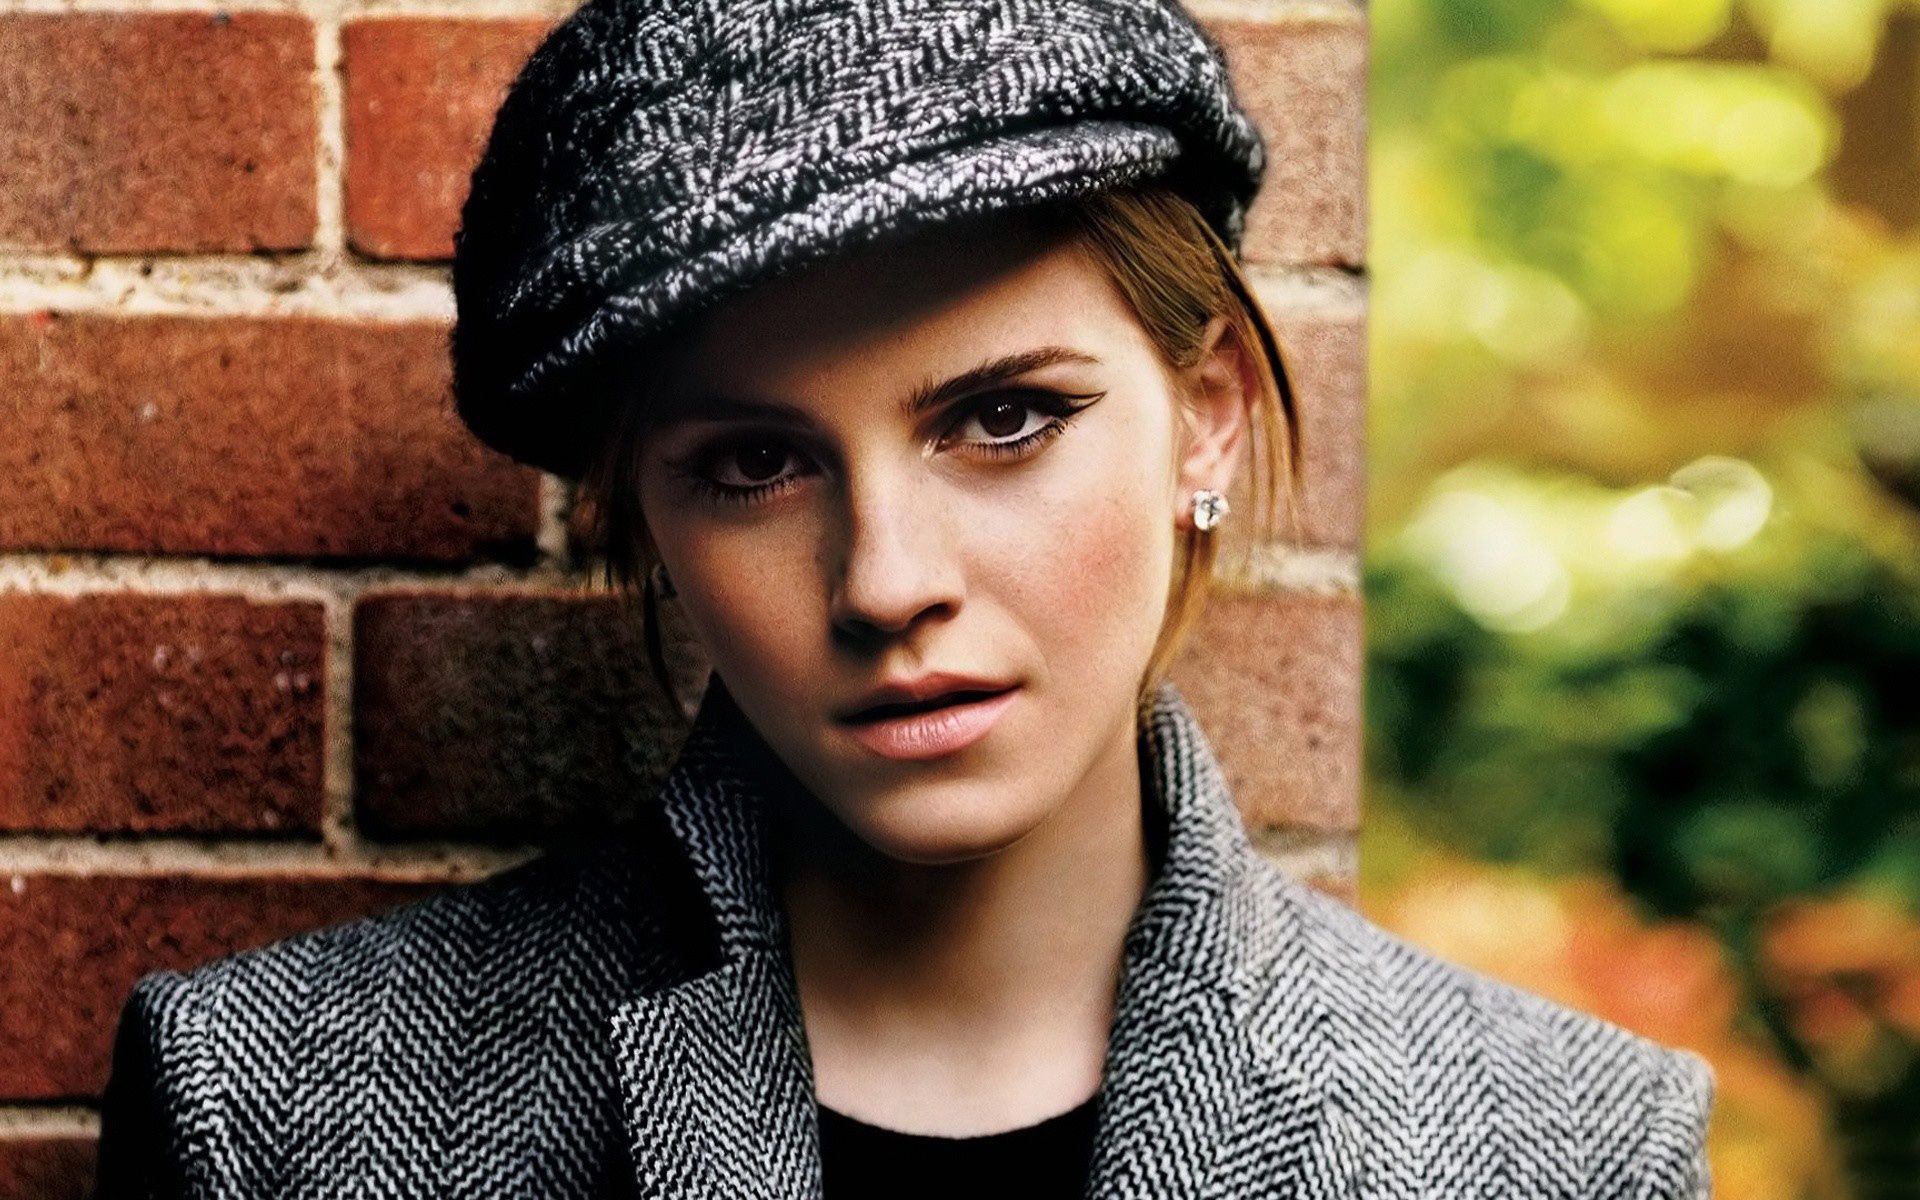 Emma Watson Wallpaper | Wallpapers, Backgrounds, Images, Art Photos.